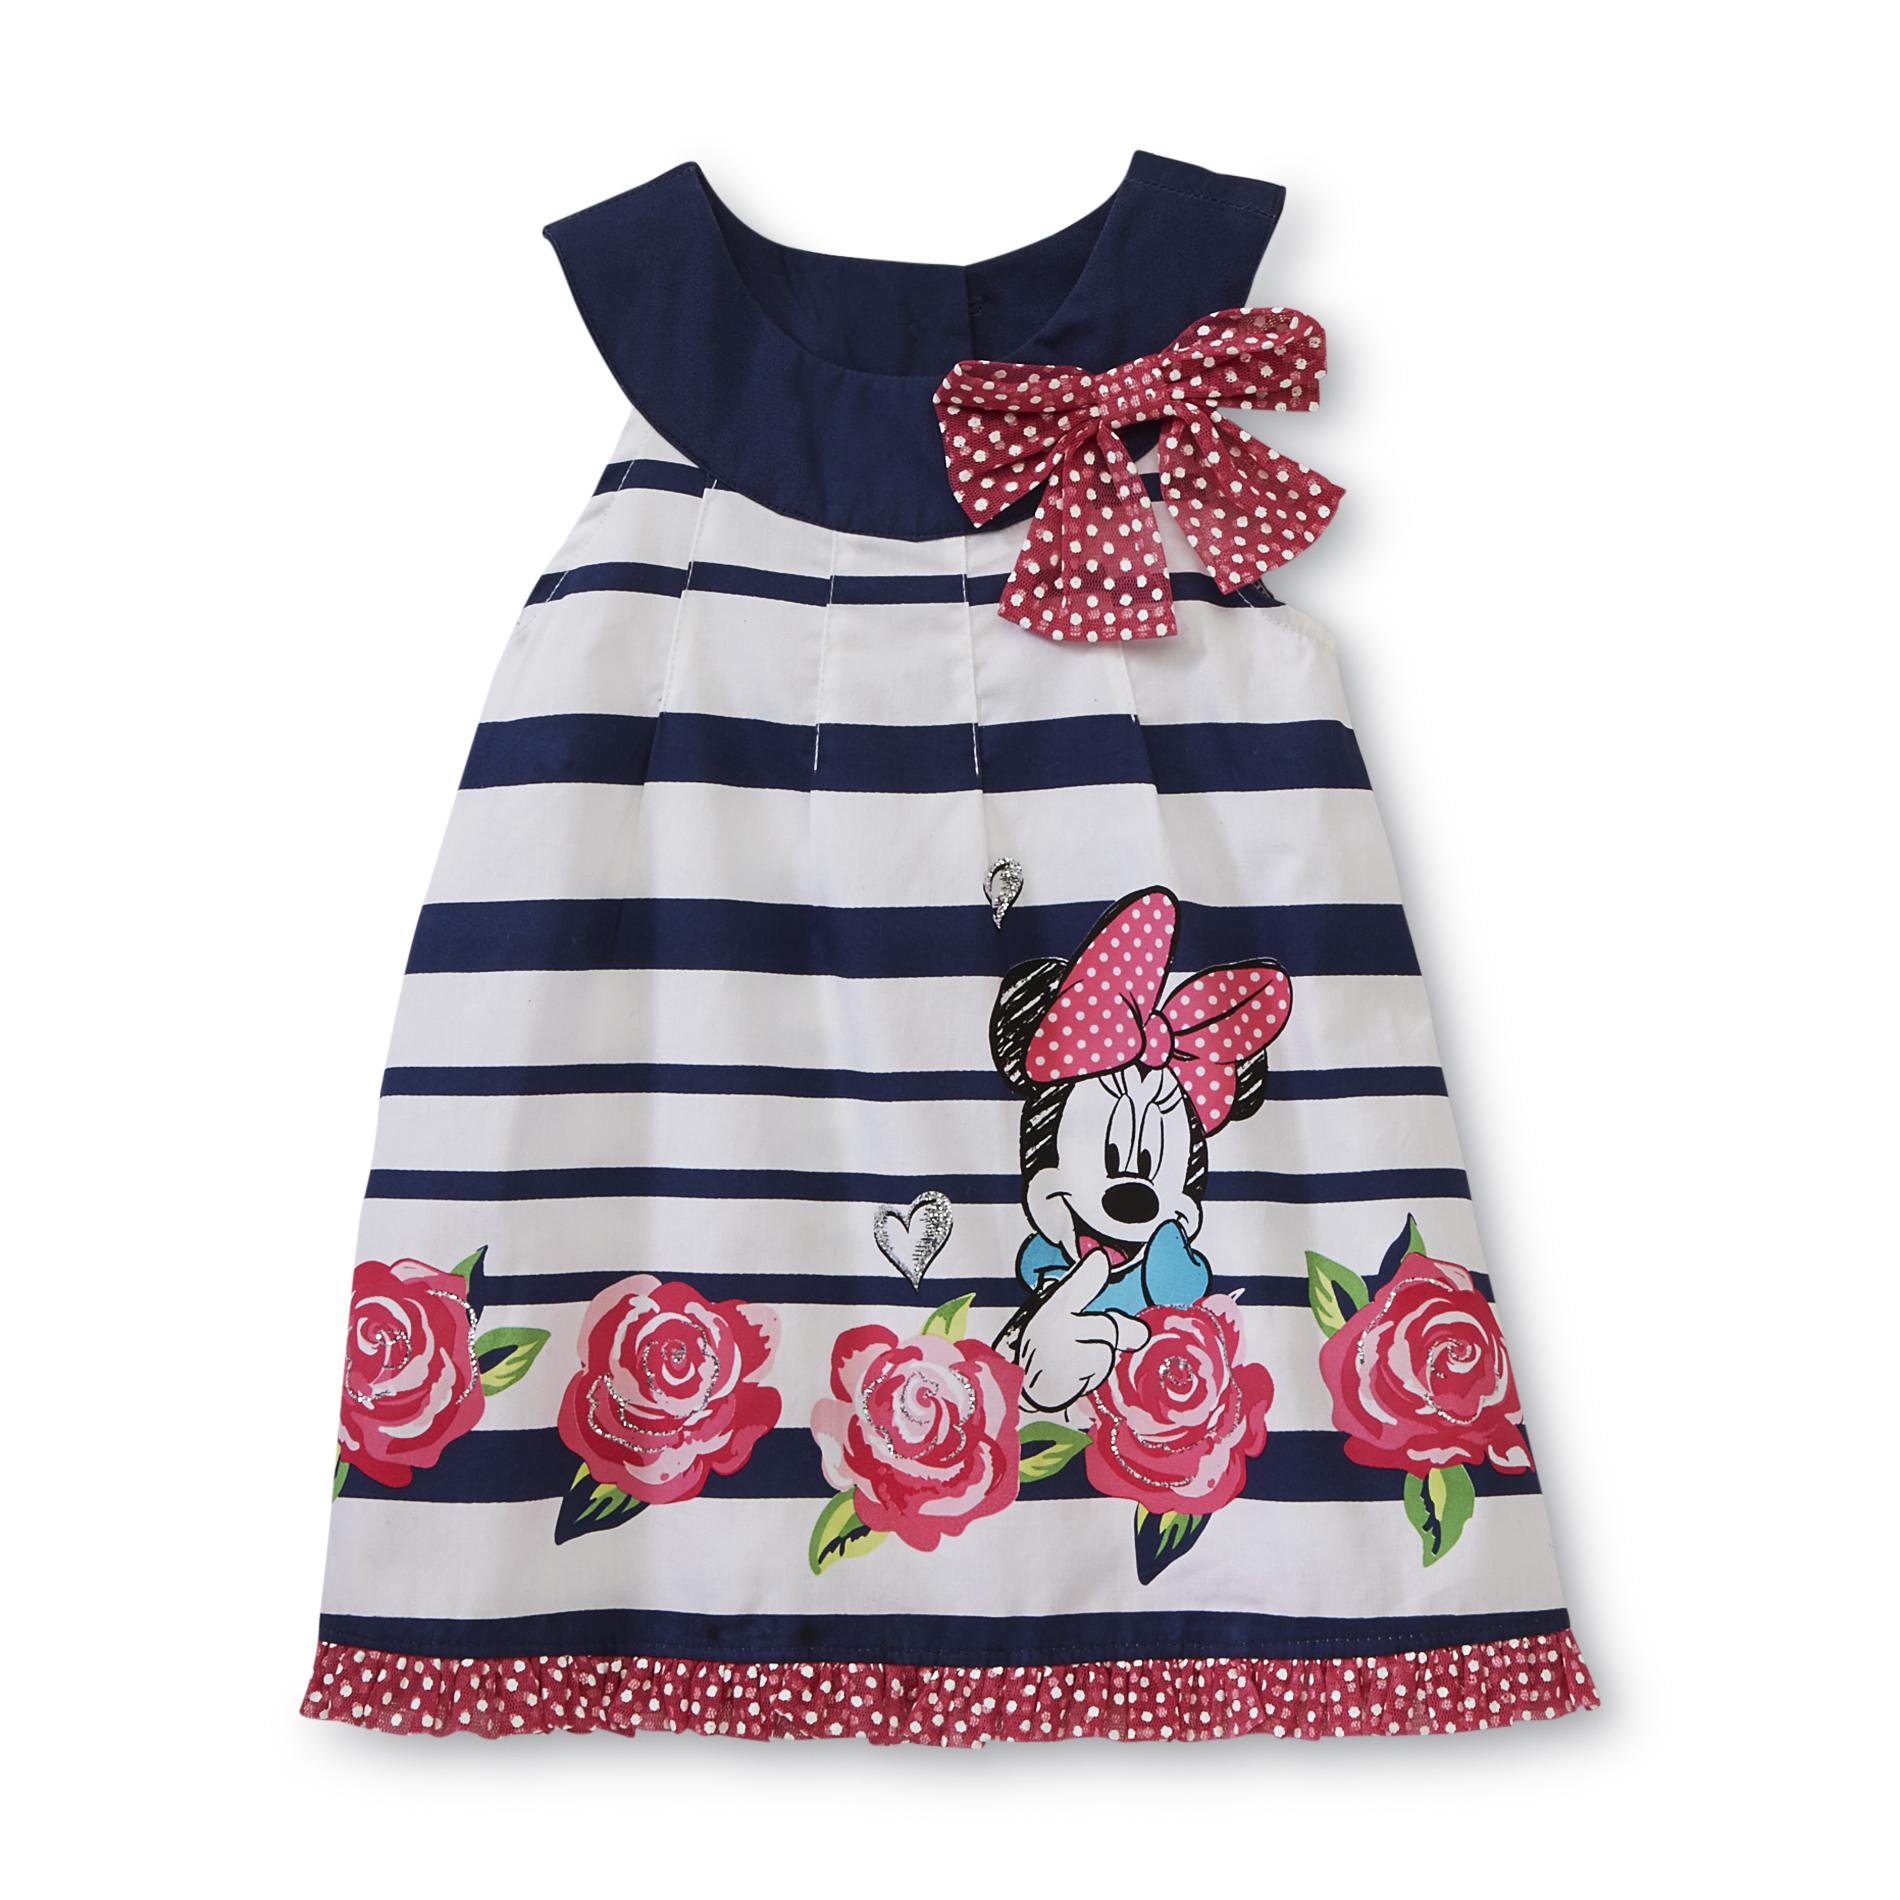 Disney Infant & Toddler Girl's Dress - Minnie Mouse Floral